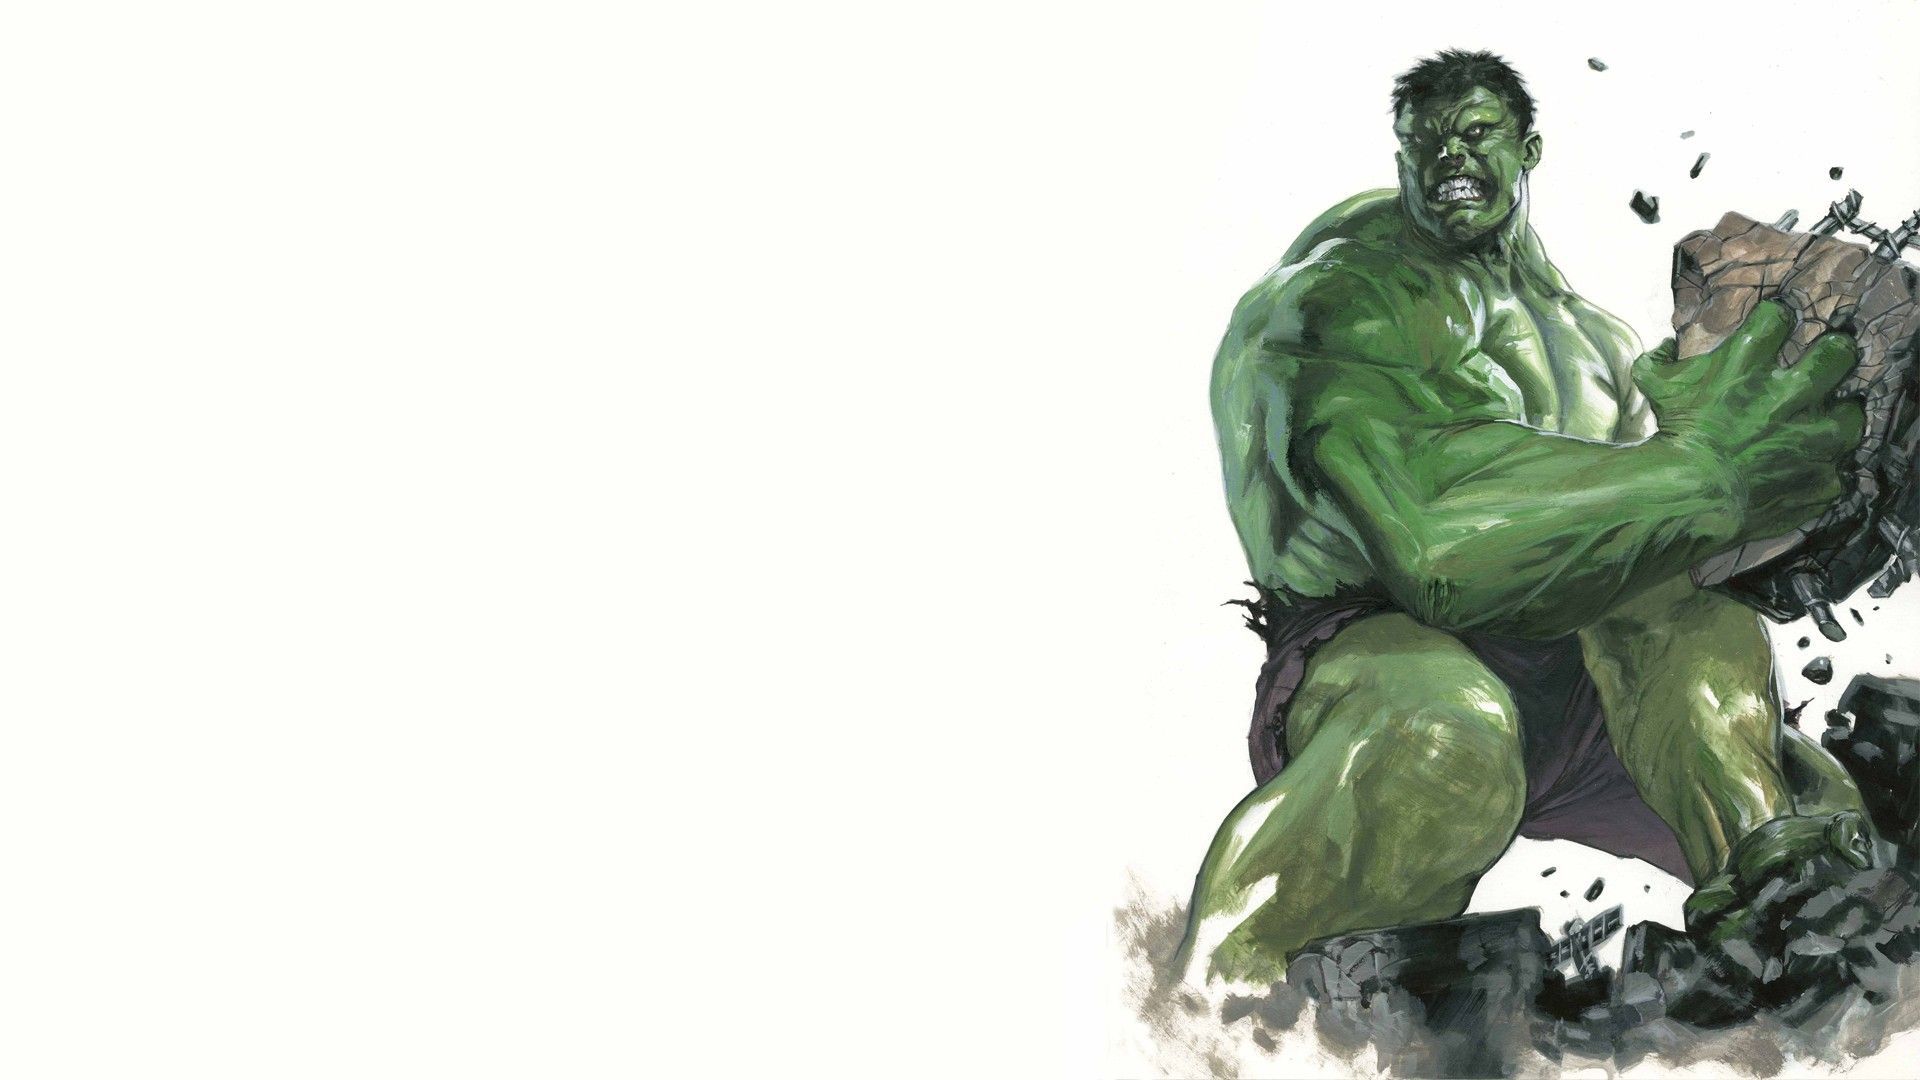  1920x1080 Hulk Hintergrundbild 1920x1080. Hulk Marvel Comics Desktop Background Image and Wallpaper